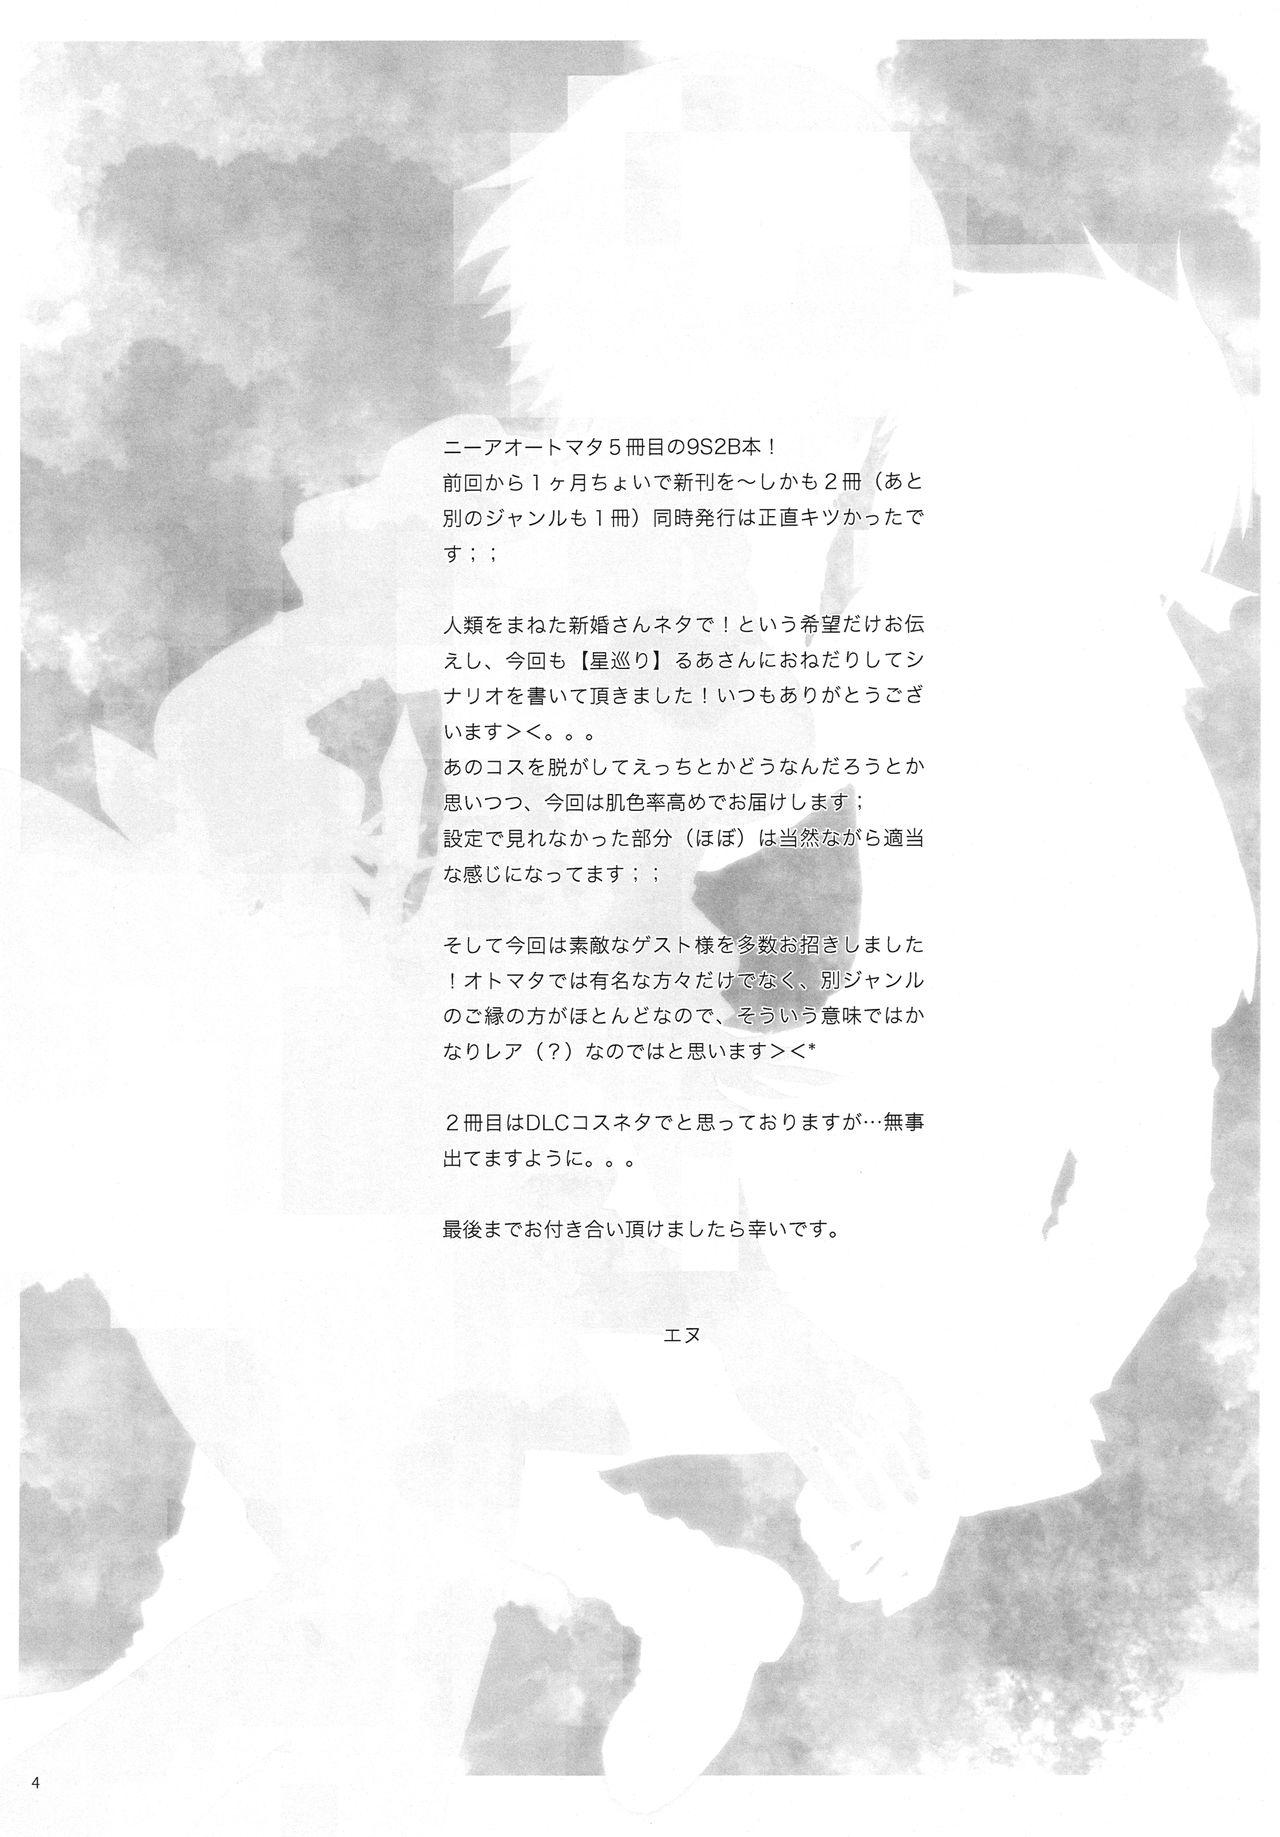 Teenxxx Michitose no momo - Nier automata Coroa - Page 3